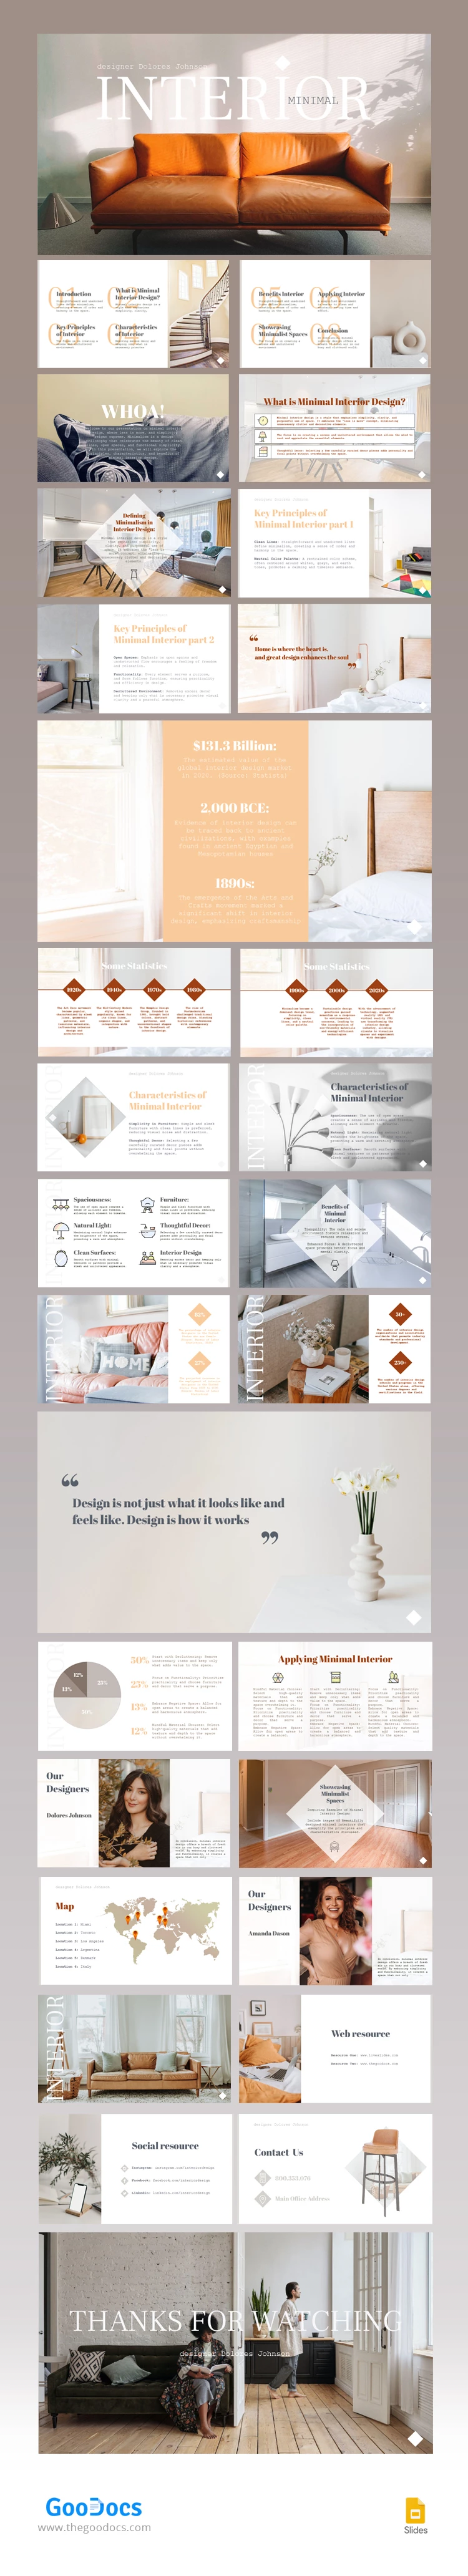 Design d'intérieur minimaliste - free Google Docs Template - 10066995